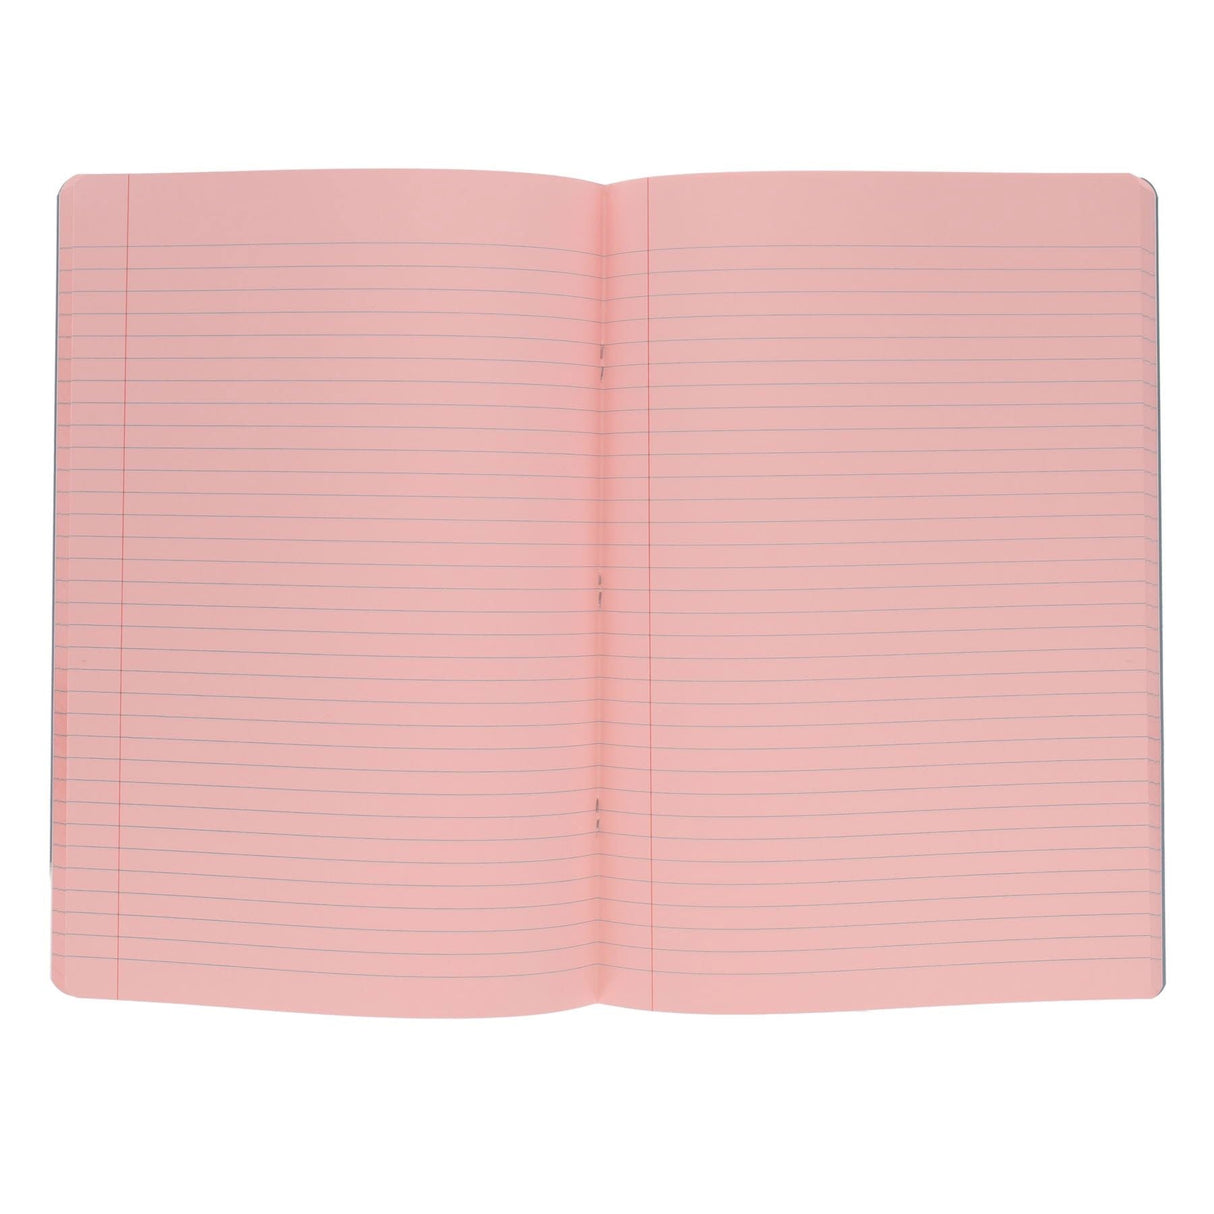 Ormond A4 Durable Cover Visual Memory Aid Manuscript Book 120 Pages - Pink-Manuscript Books-Ormond|StationeryShop.co.uk